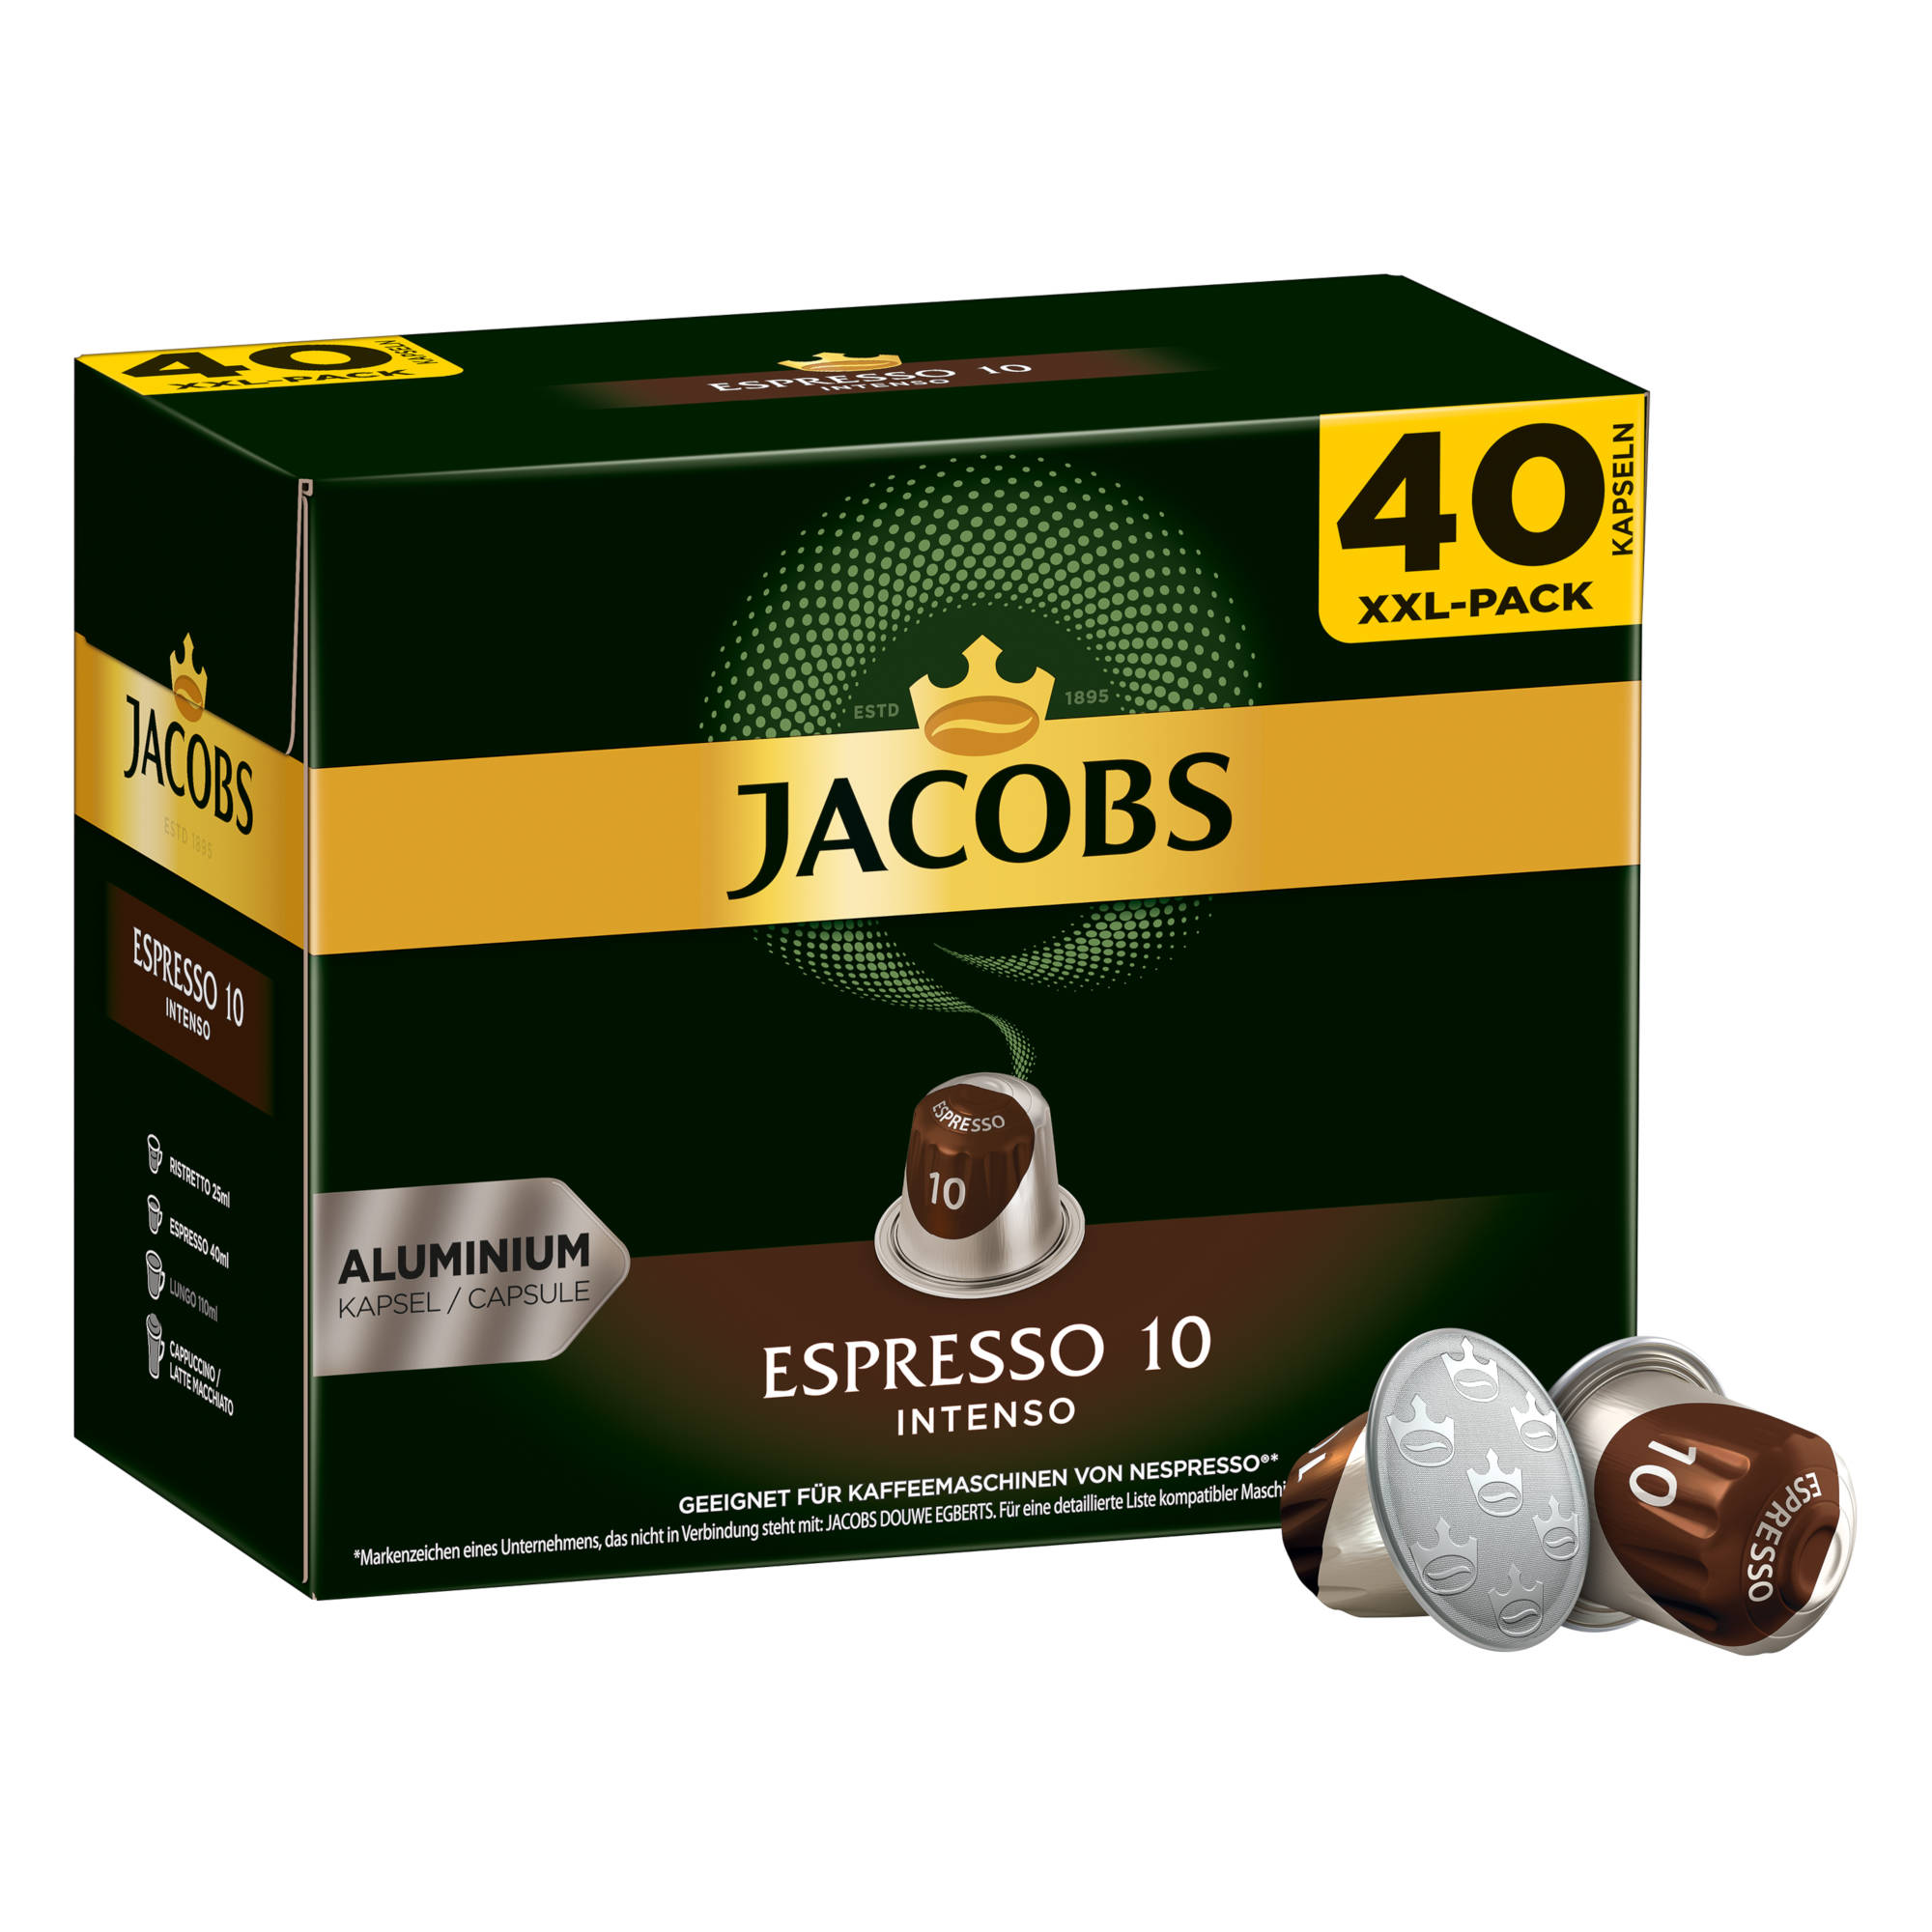 Nespresso®* kompatibel JACOBS Lungo Espresso 6 + System) Kaffeekapseln (Nespresso 240 10